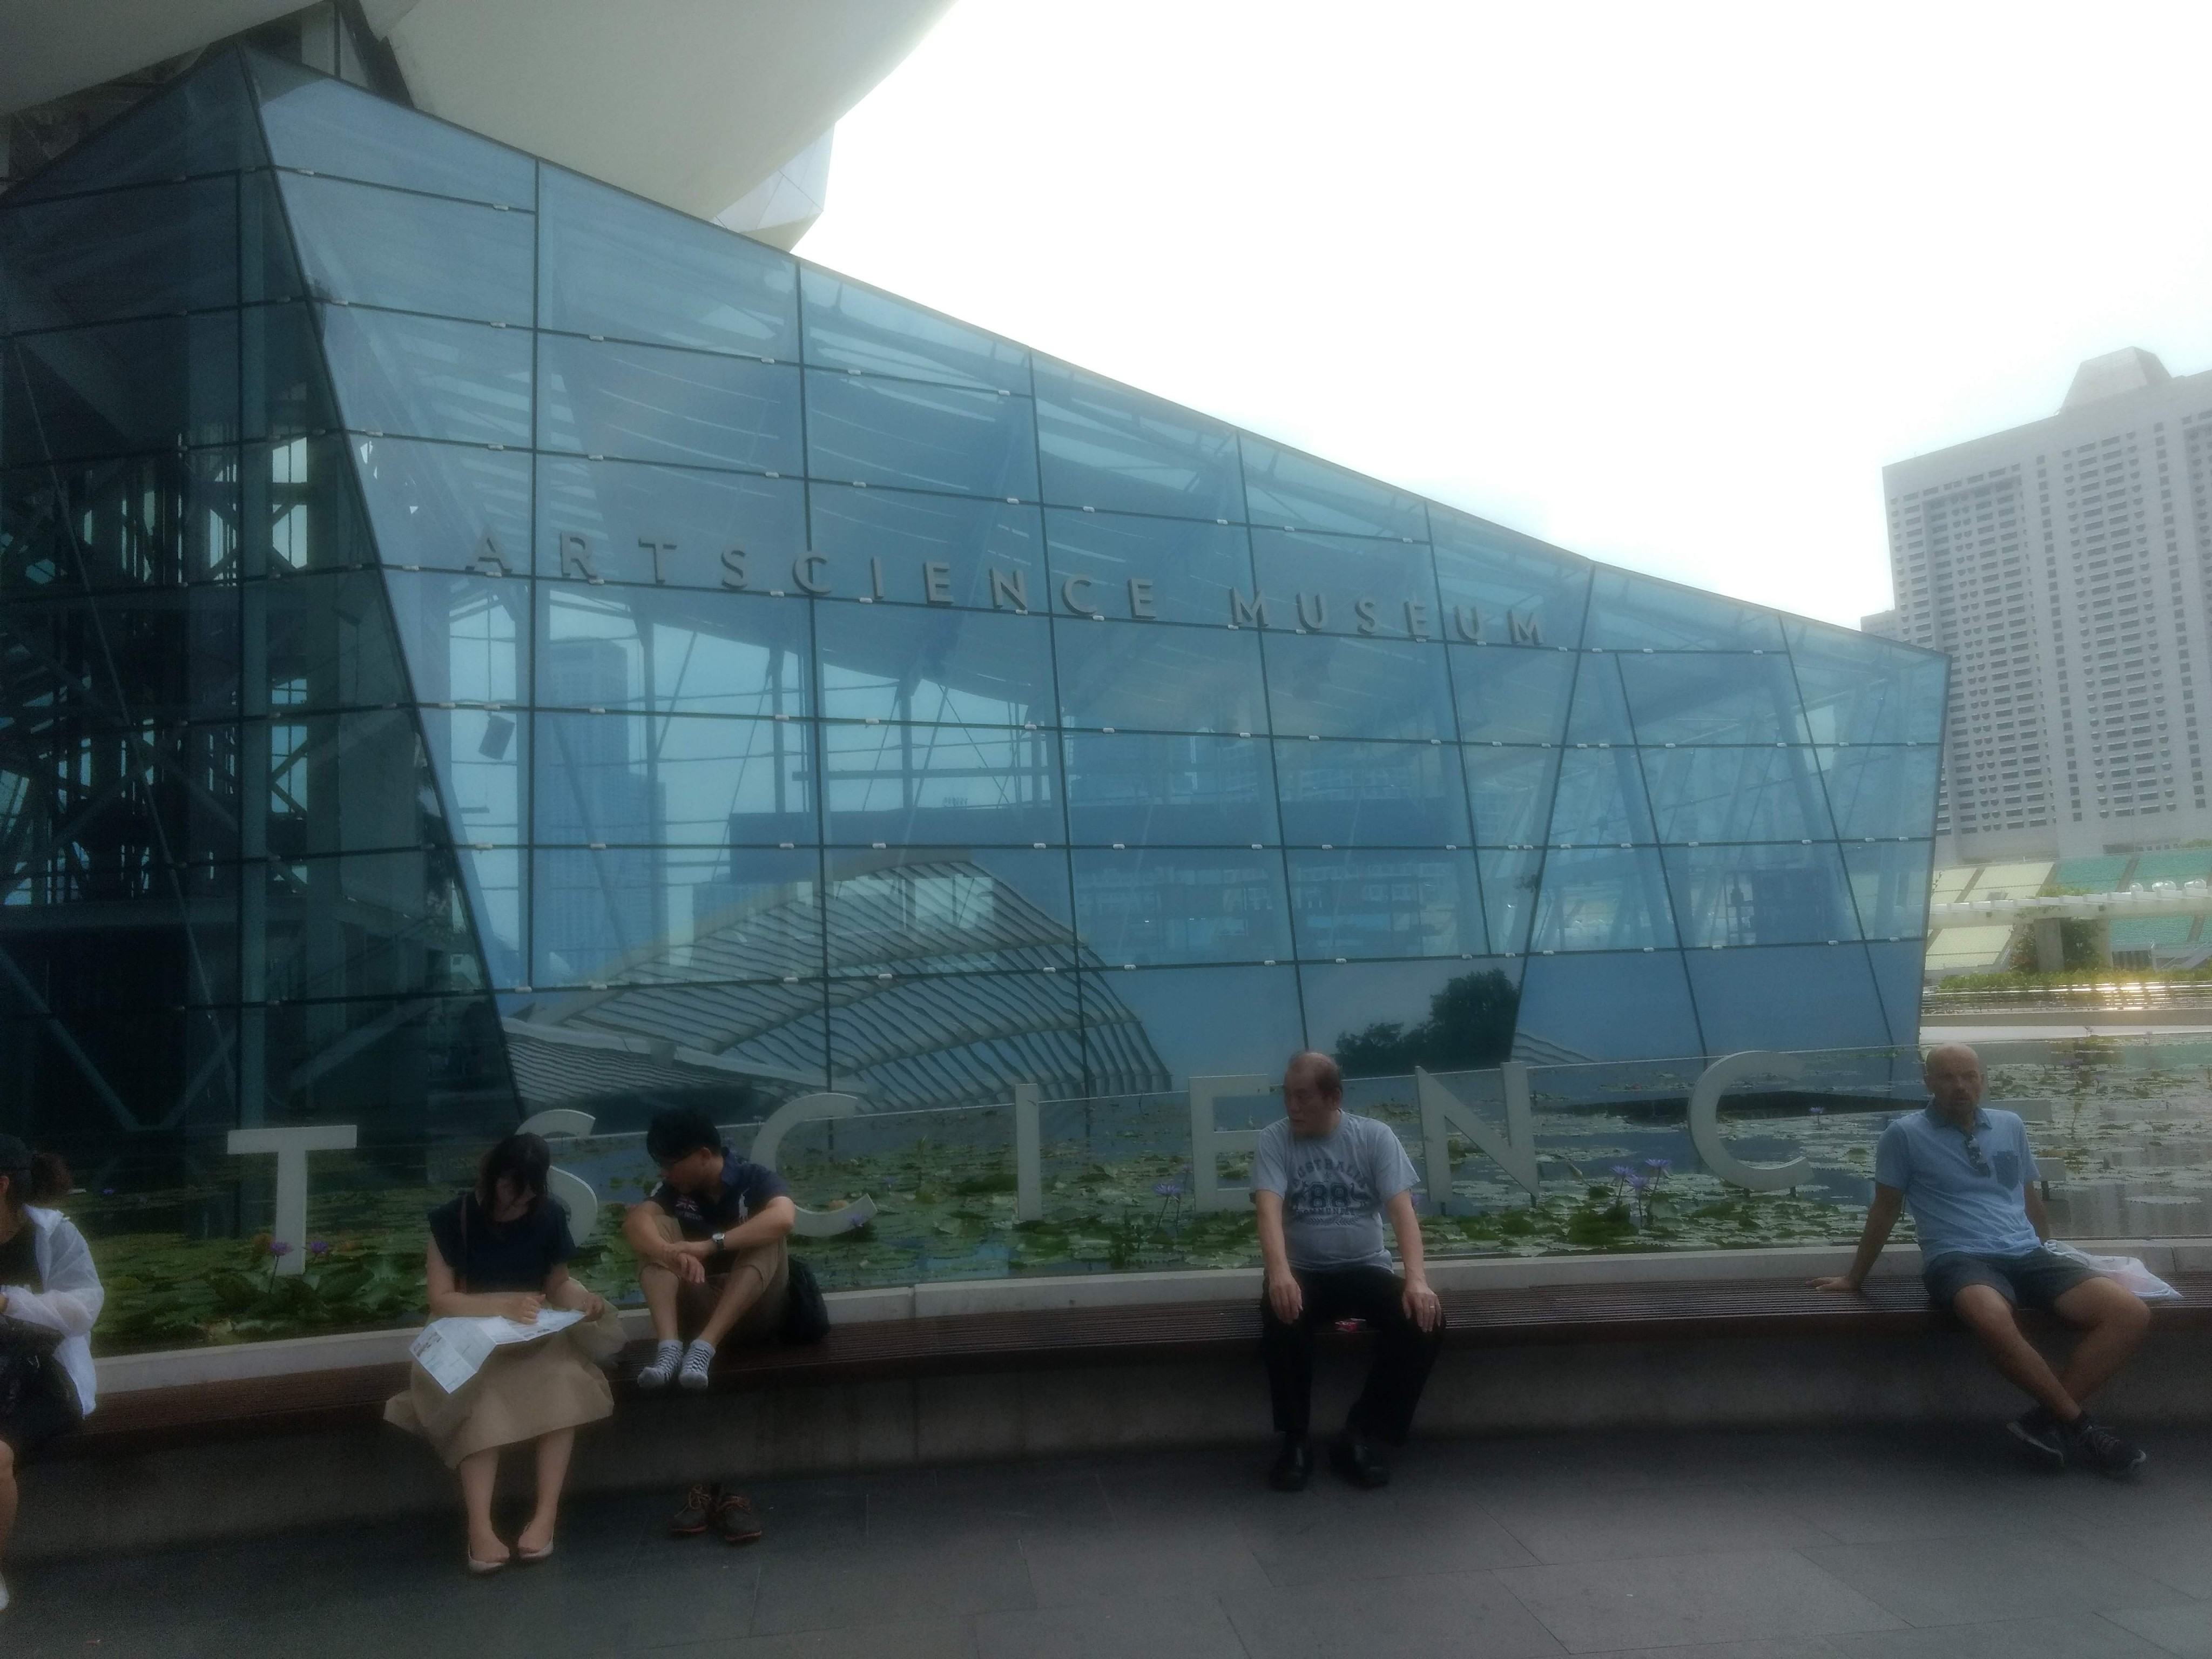 AetScience Museum, Marina Bay Sands, Singapore